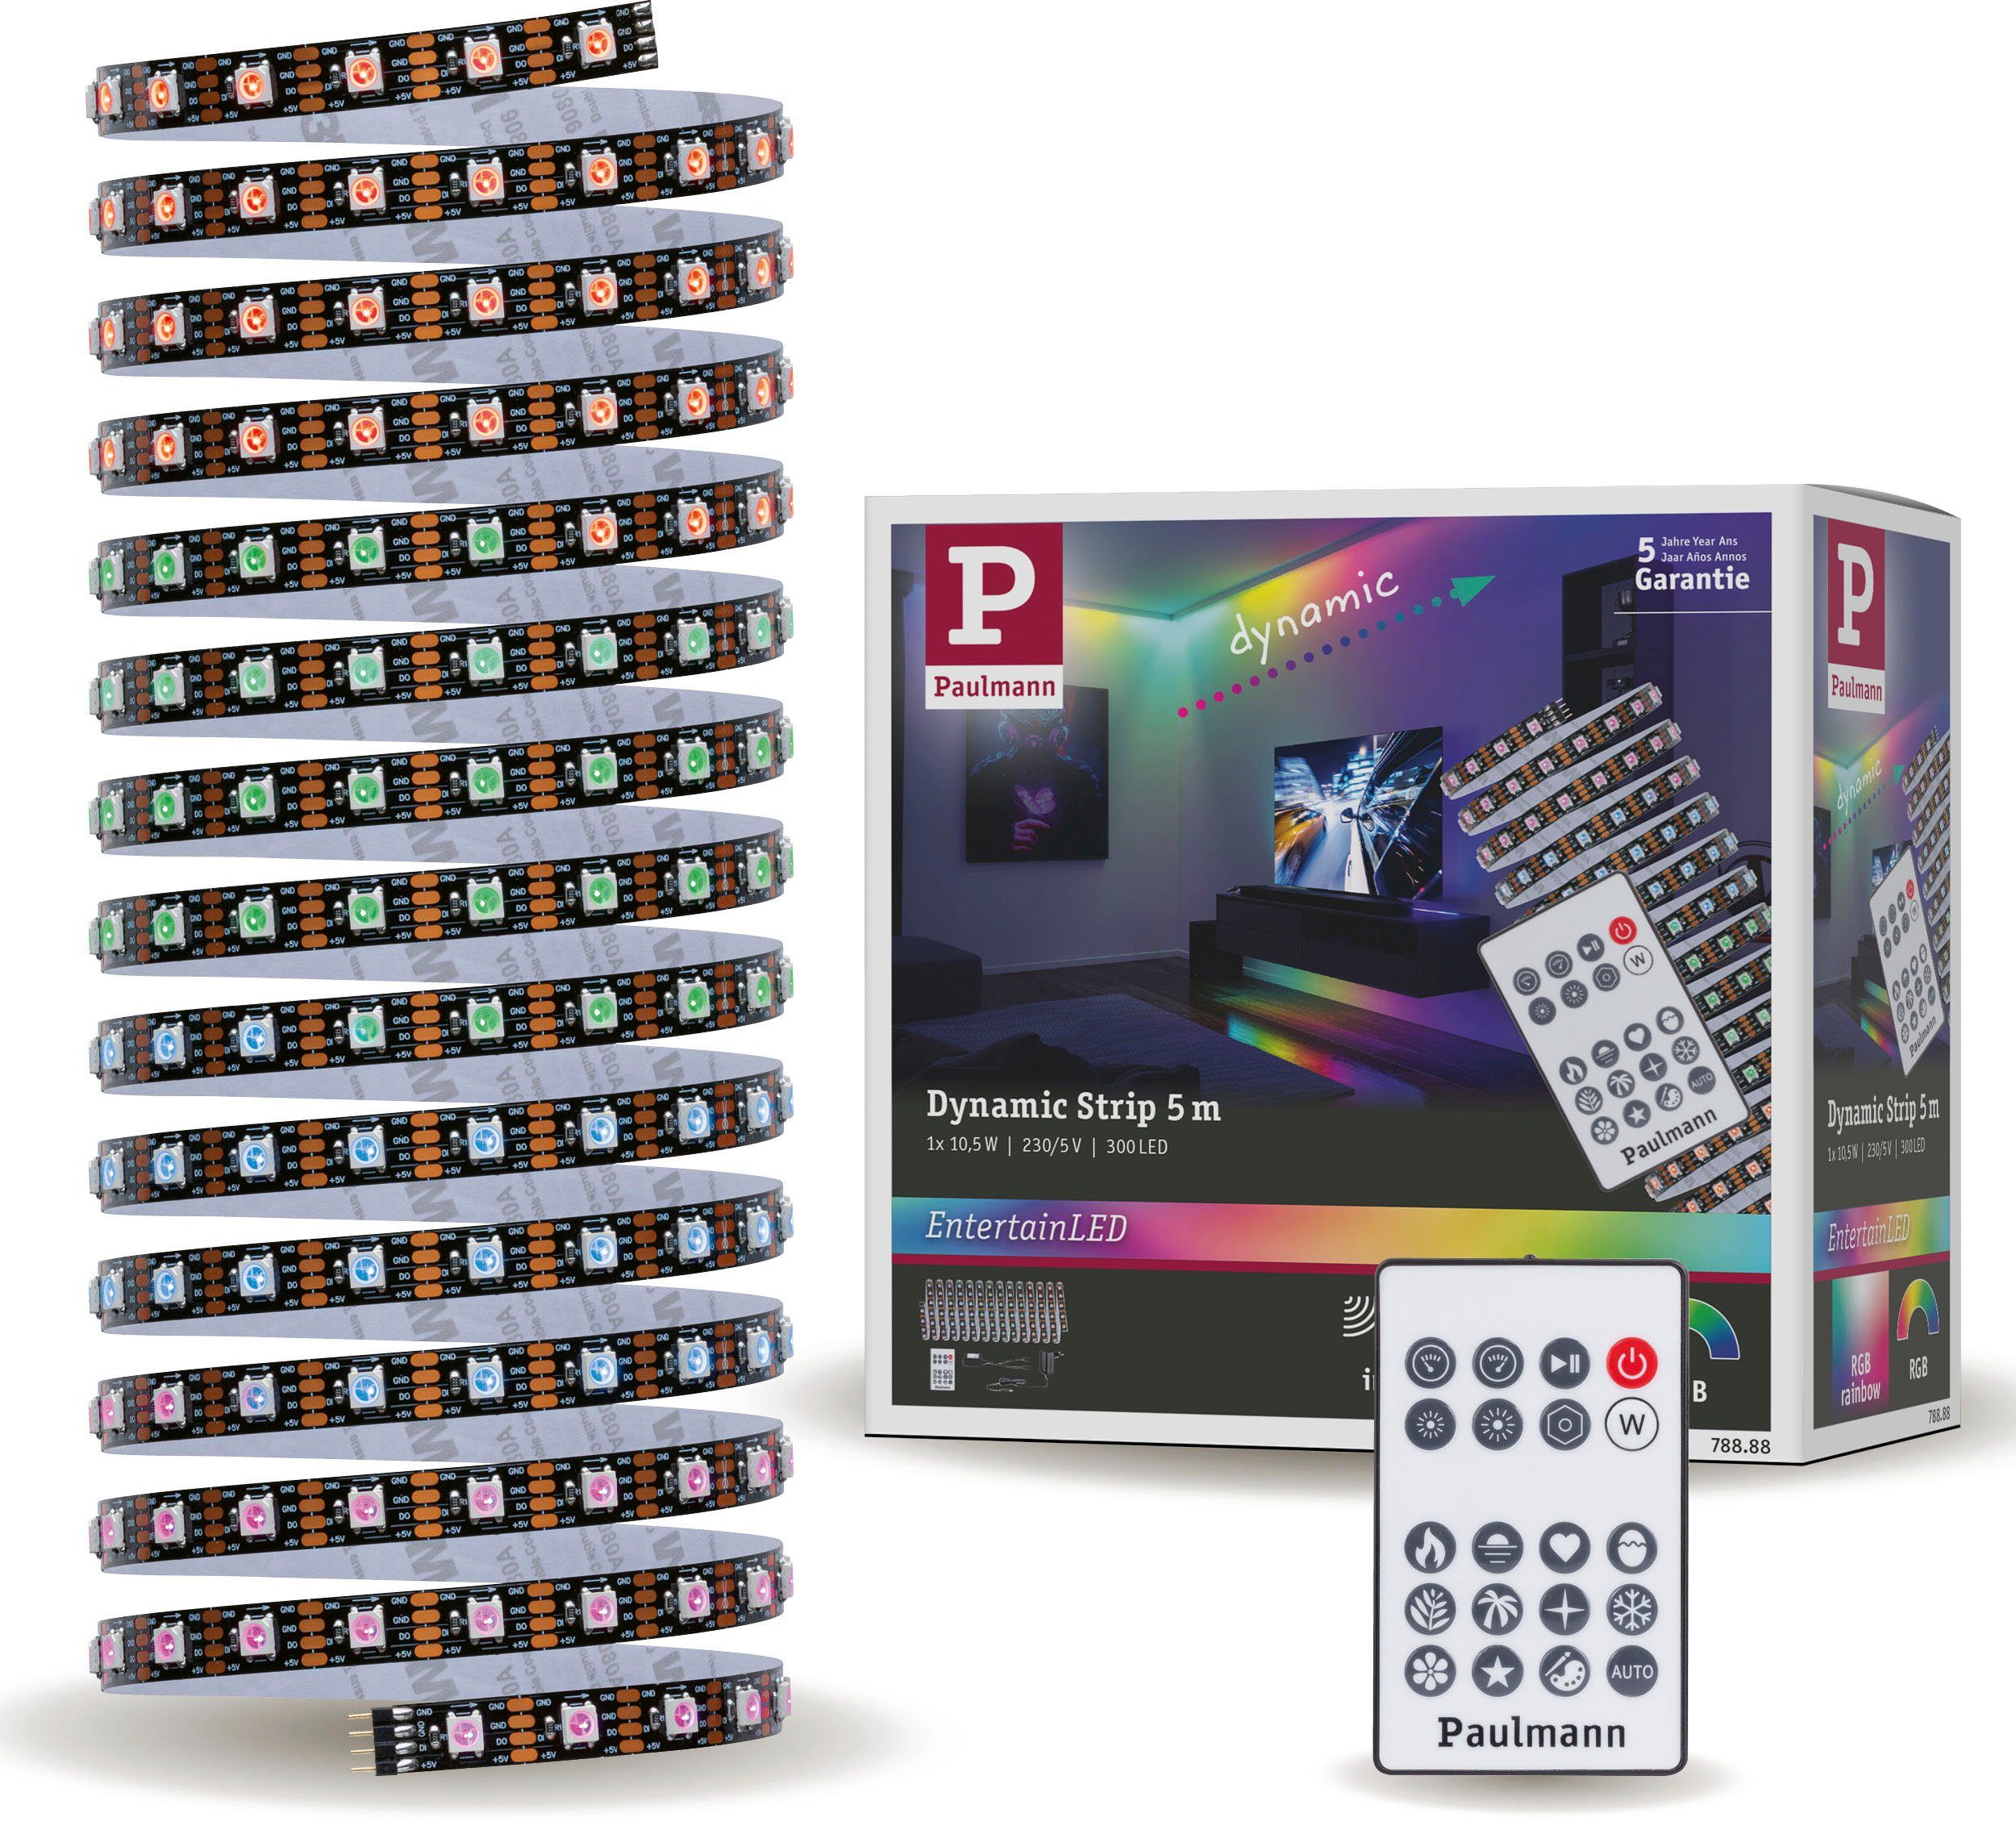 Dynamic bis RGB 15VA, 1-flammig, 60LEDs/m Energieeffiziente Paulmann Energie 5m LED-Streifen spart zu LED-Technik 80% 10,5W Rainbow